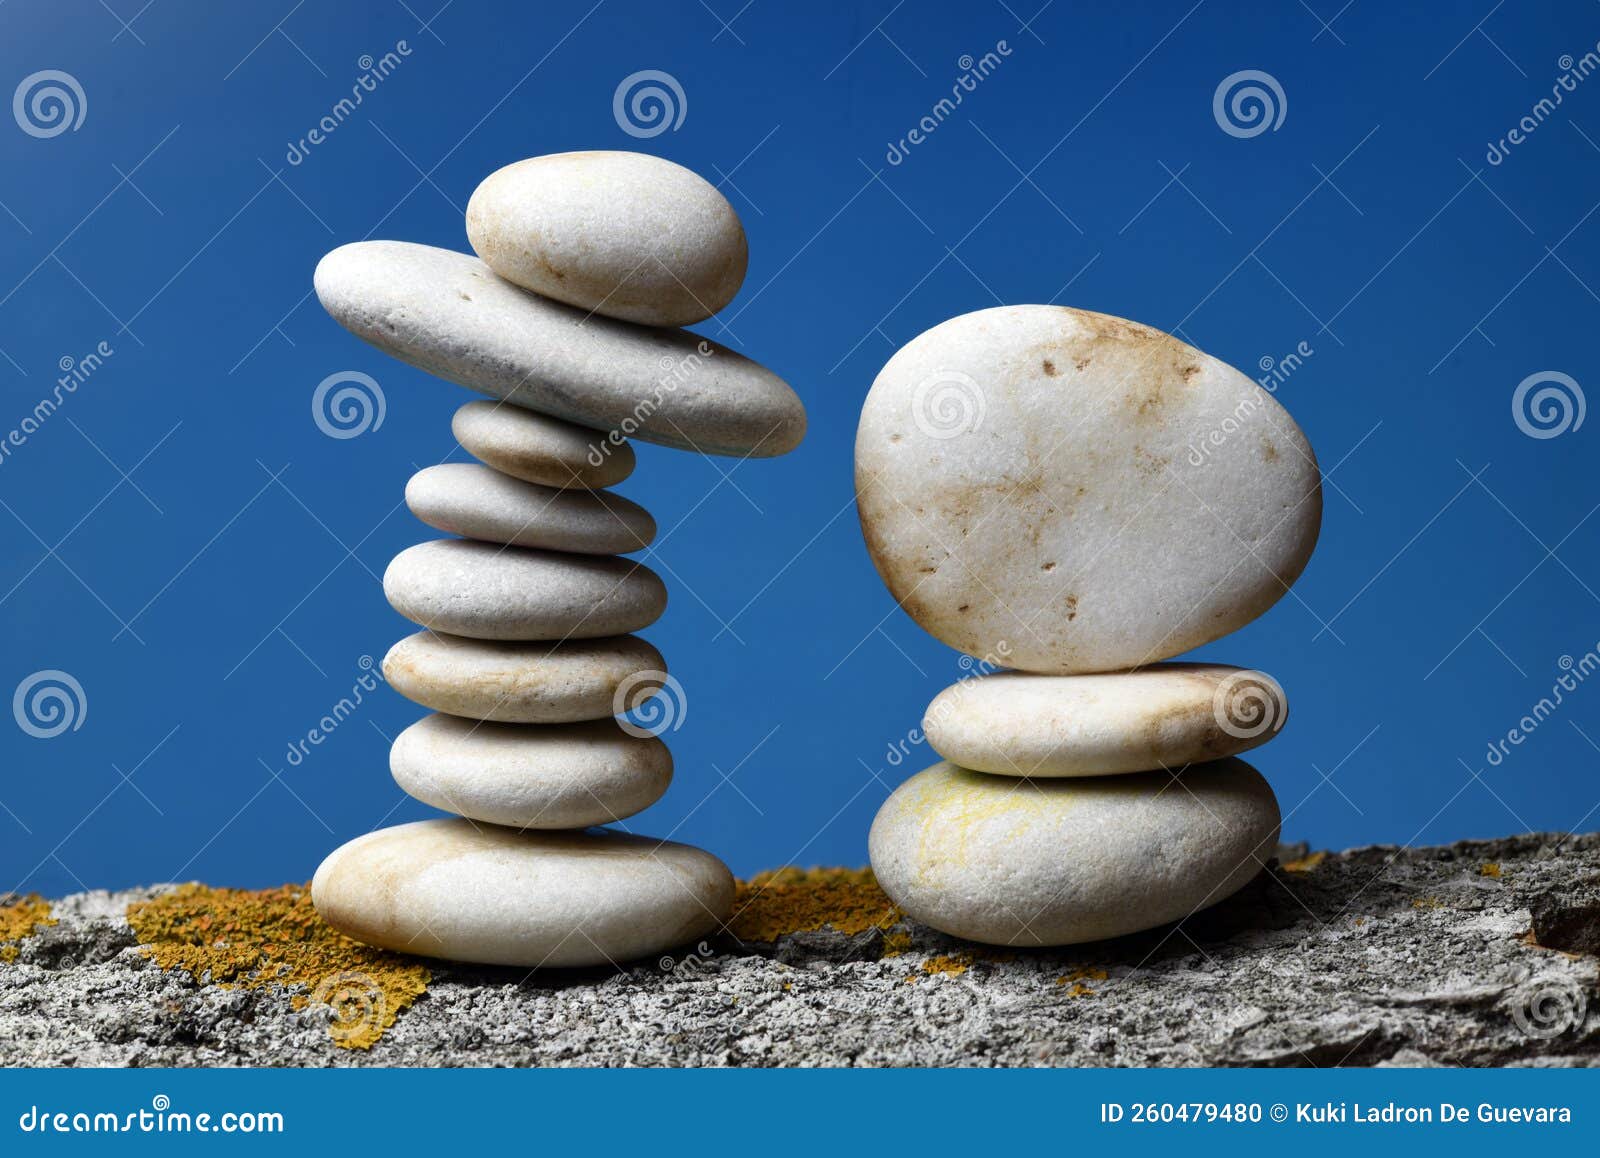 stacked stones keeping balance